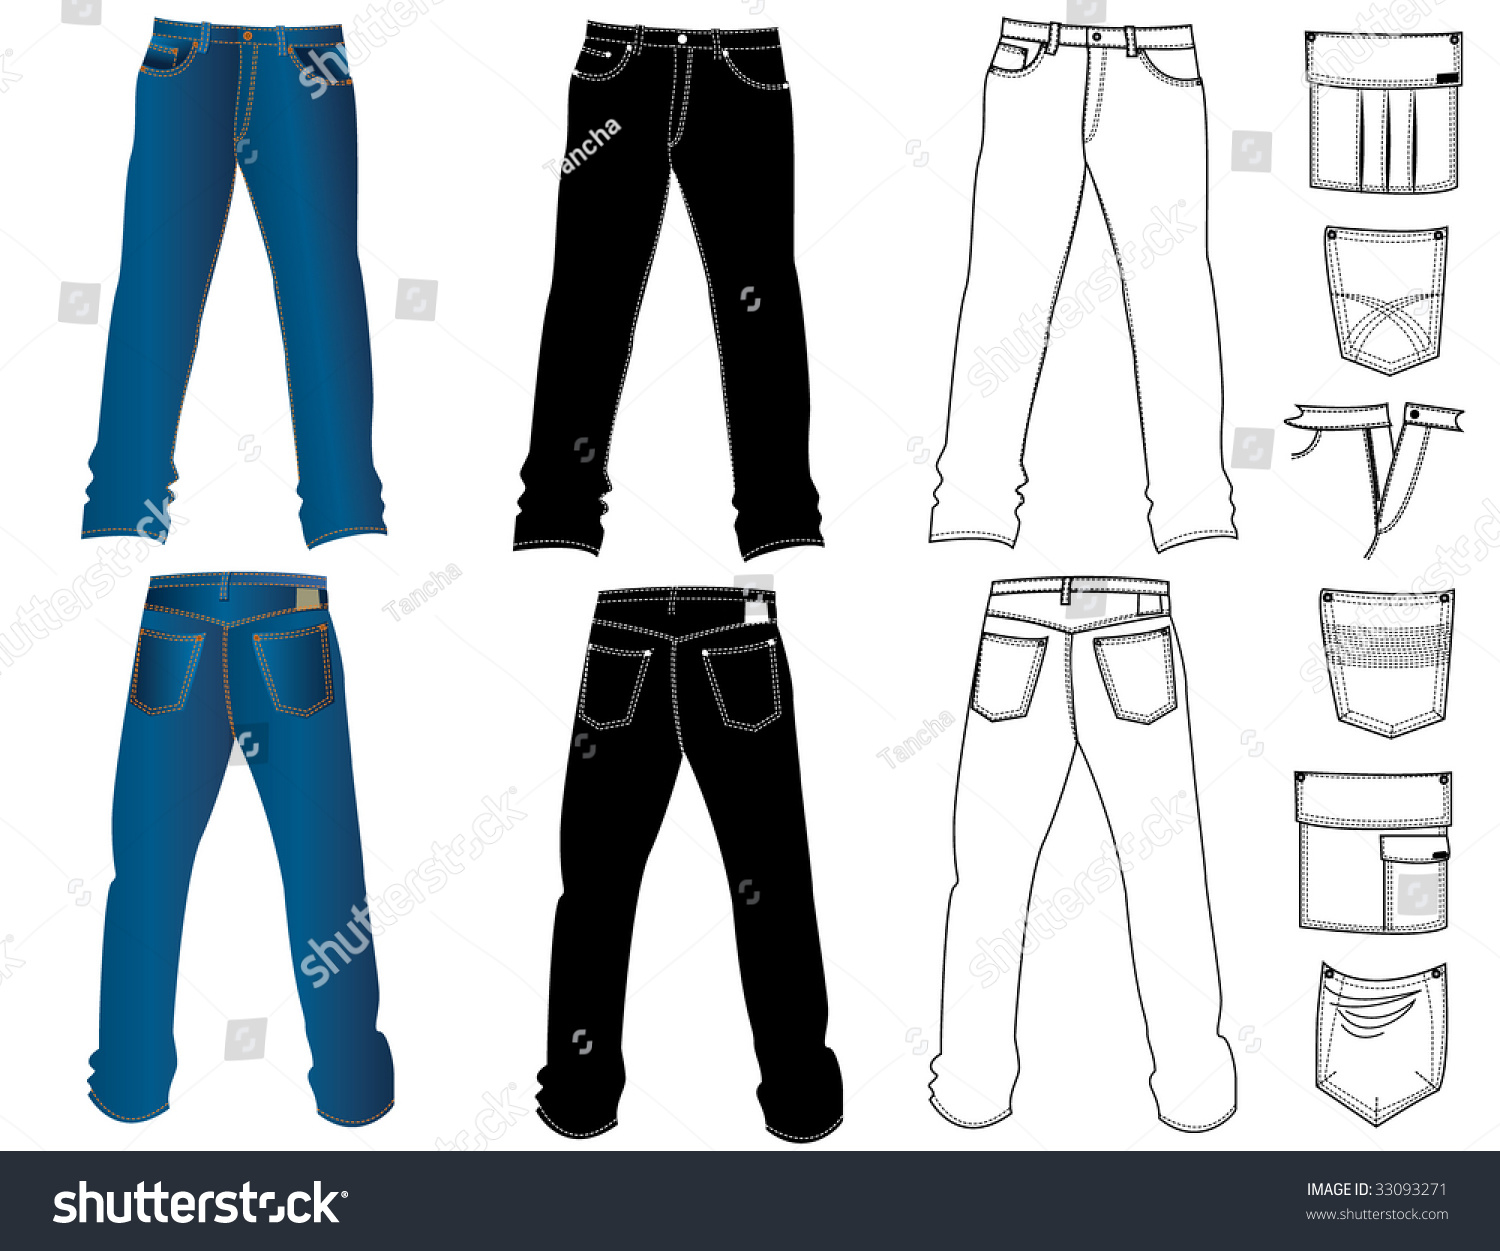 Jeans.Vector - 33093271 : Shutterstock